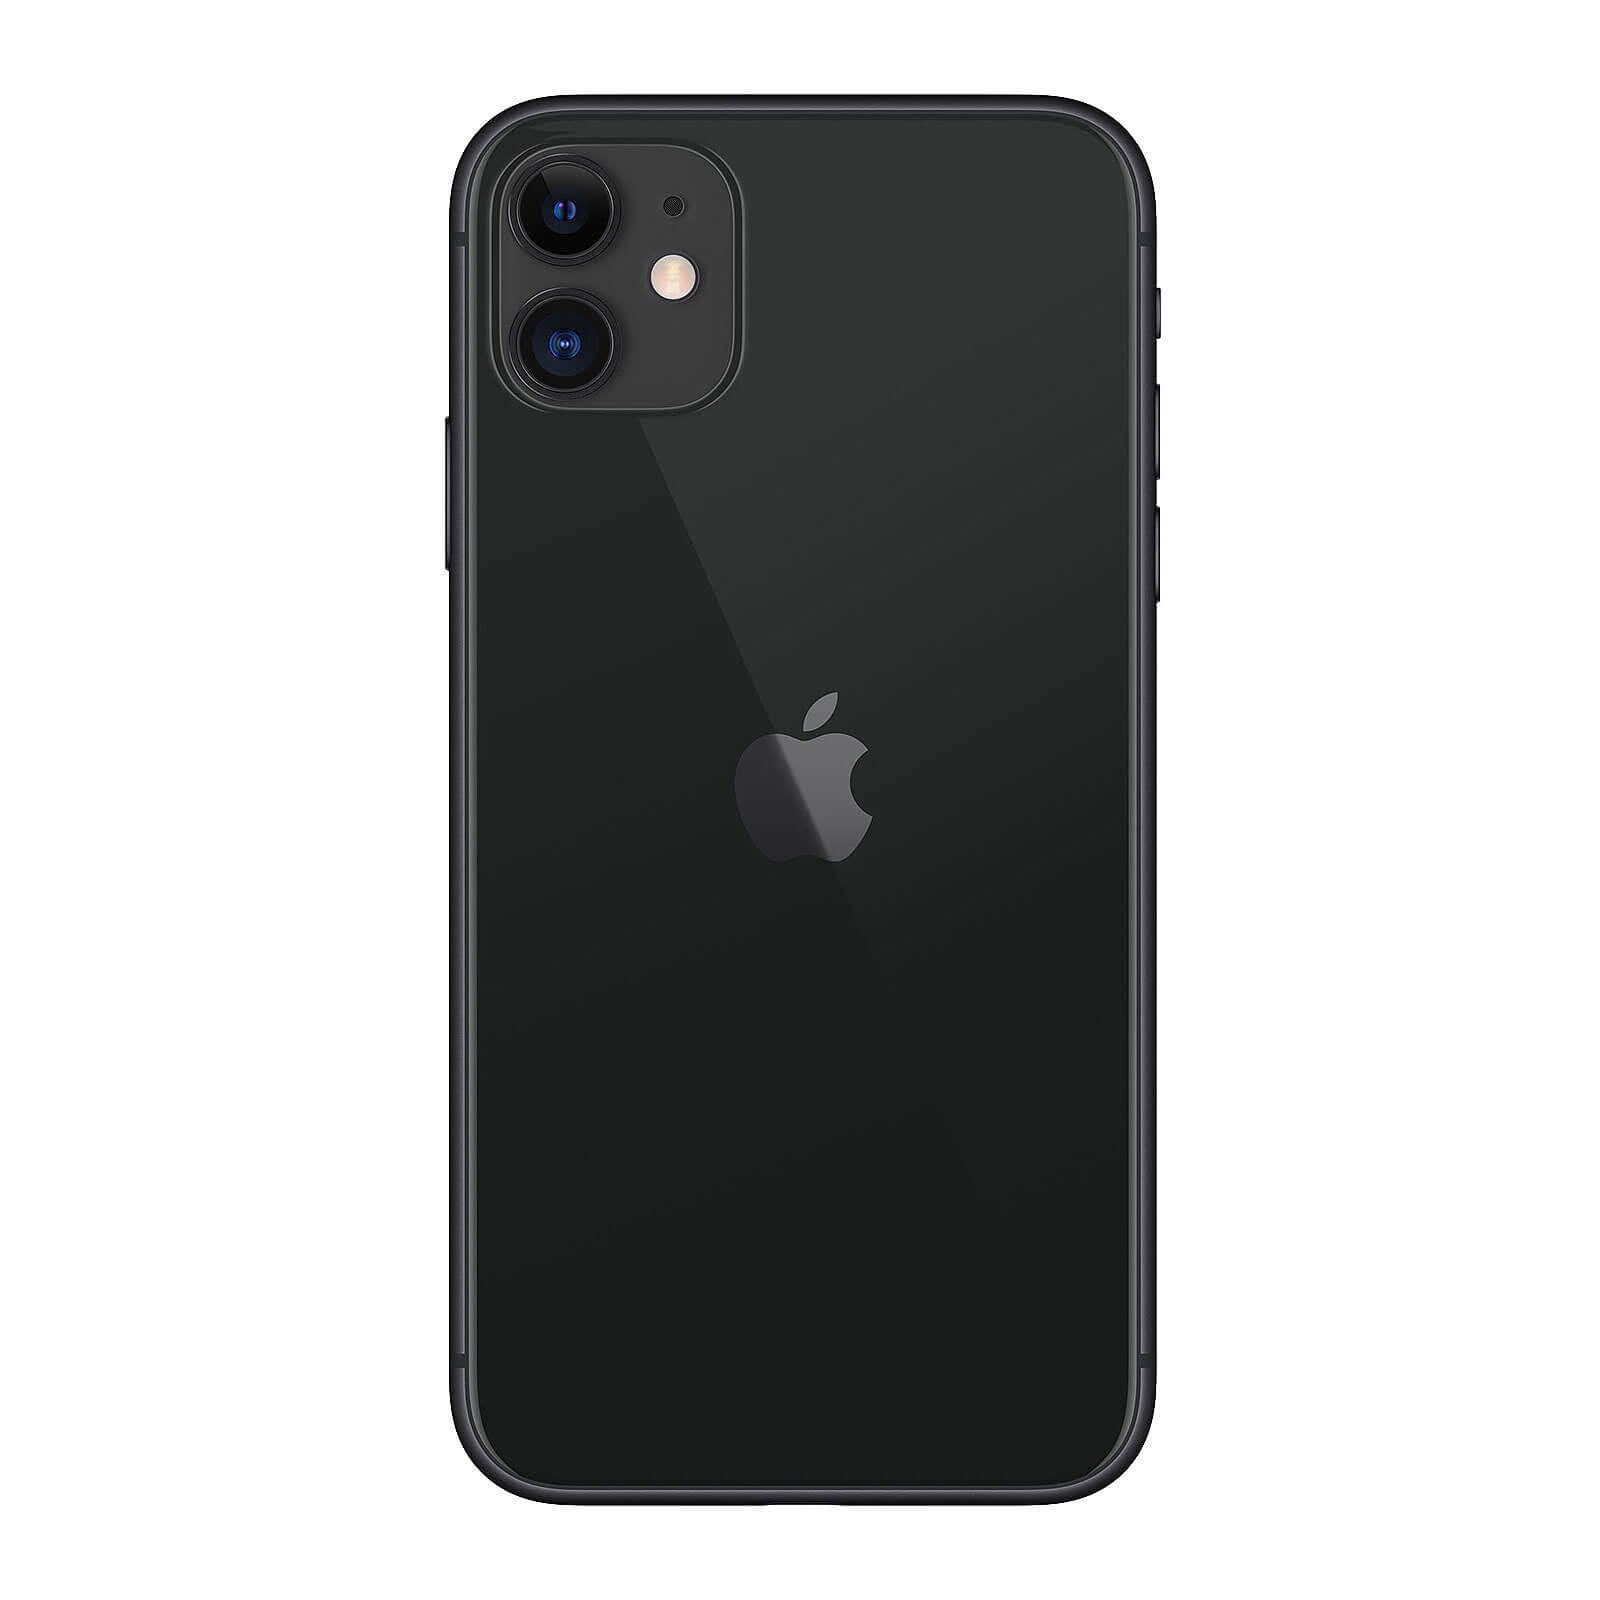 Apple iPhone 11 128GB Black Very Good - Unlocked